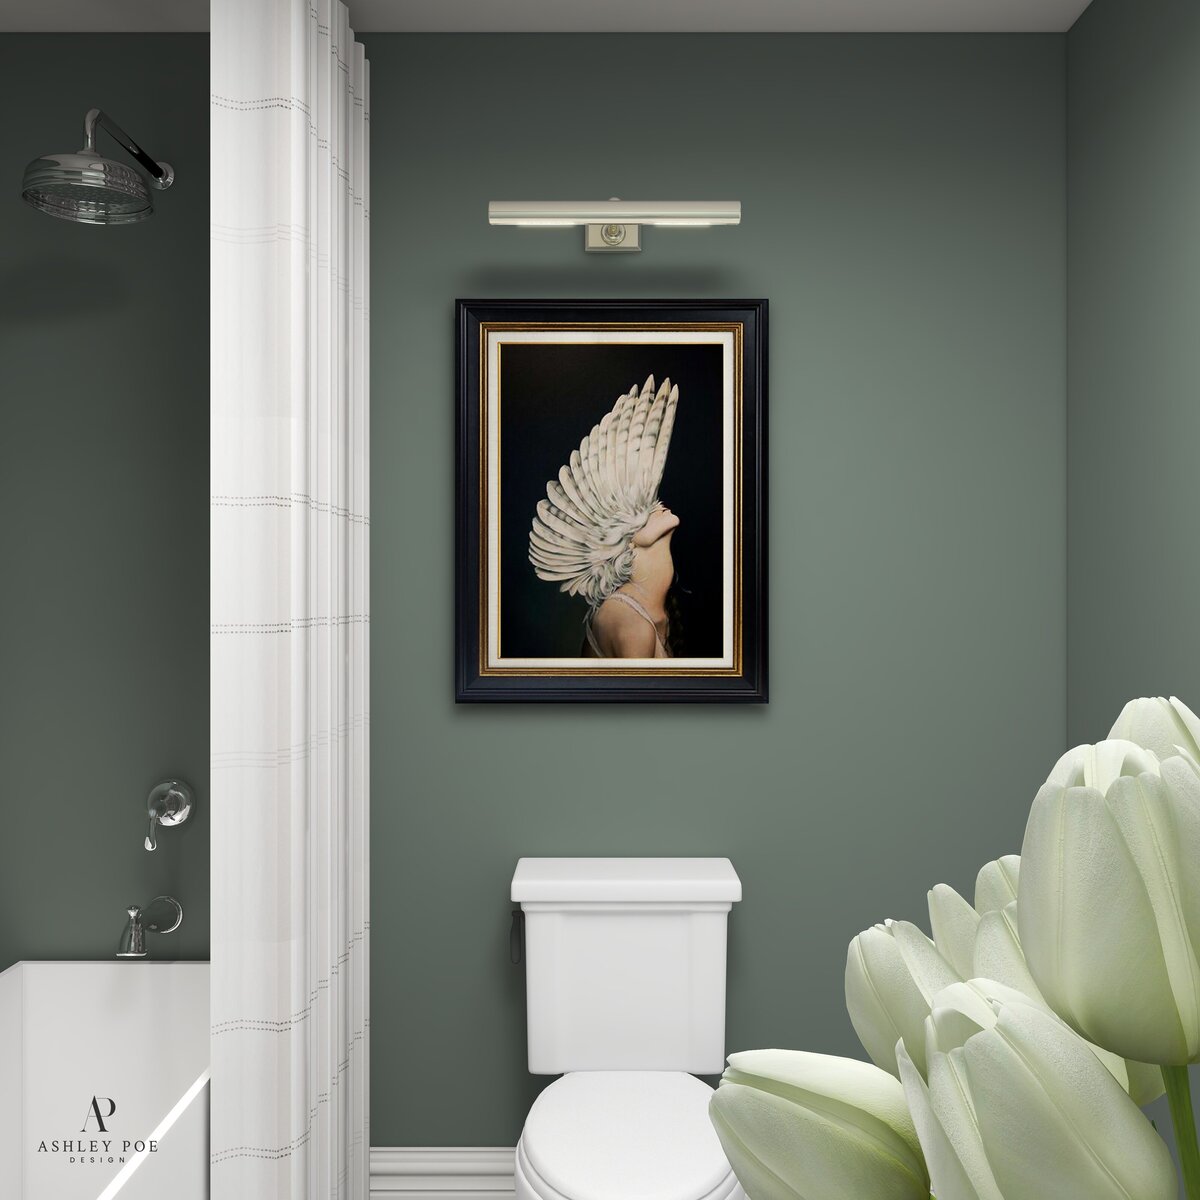 Bathroom-remodel-ashley-poe-design-scottsdale-arizona